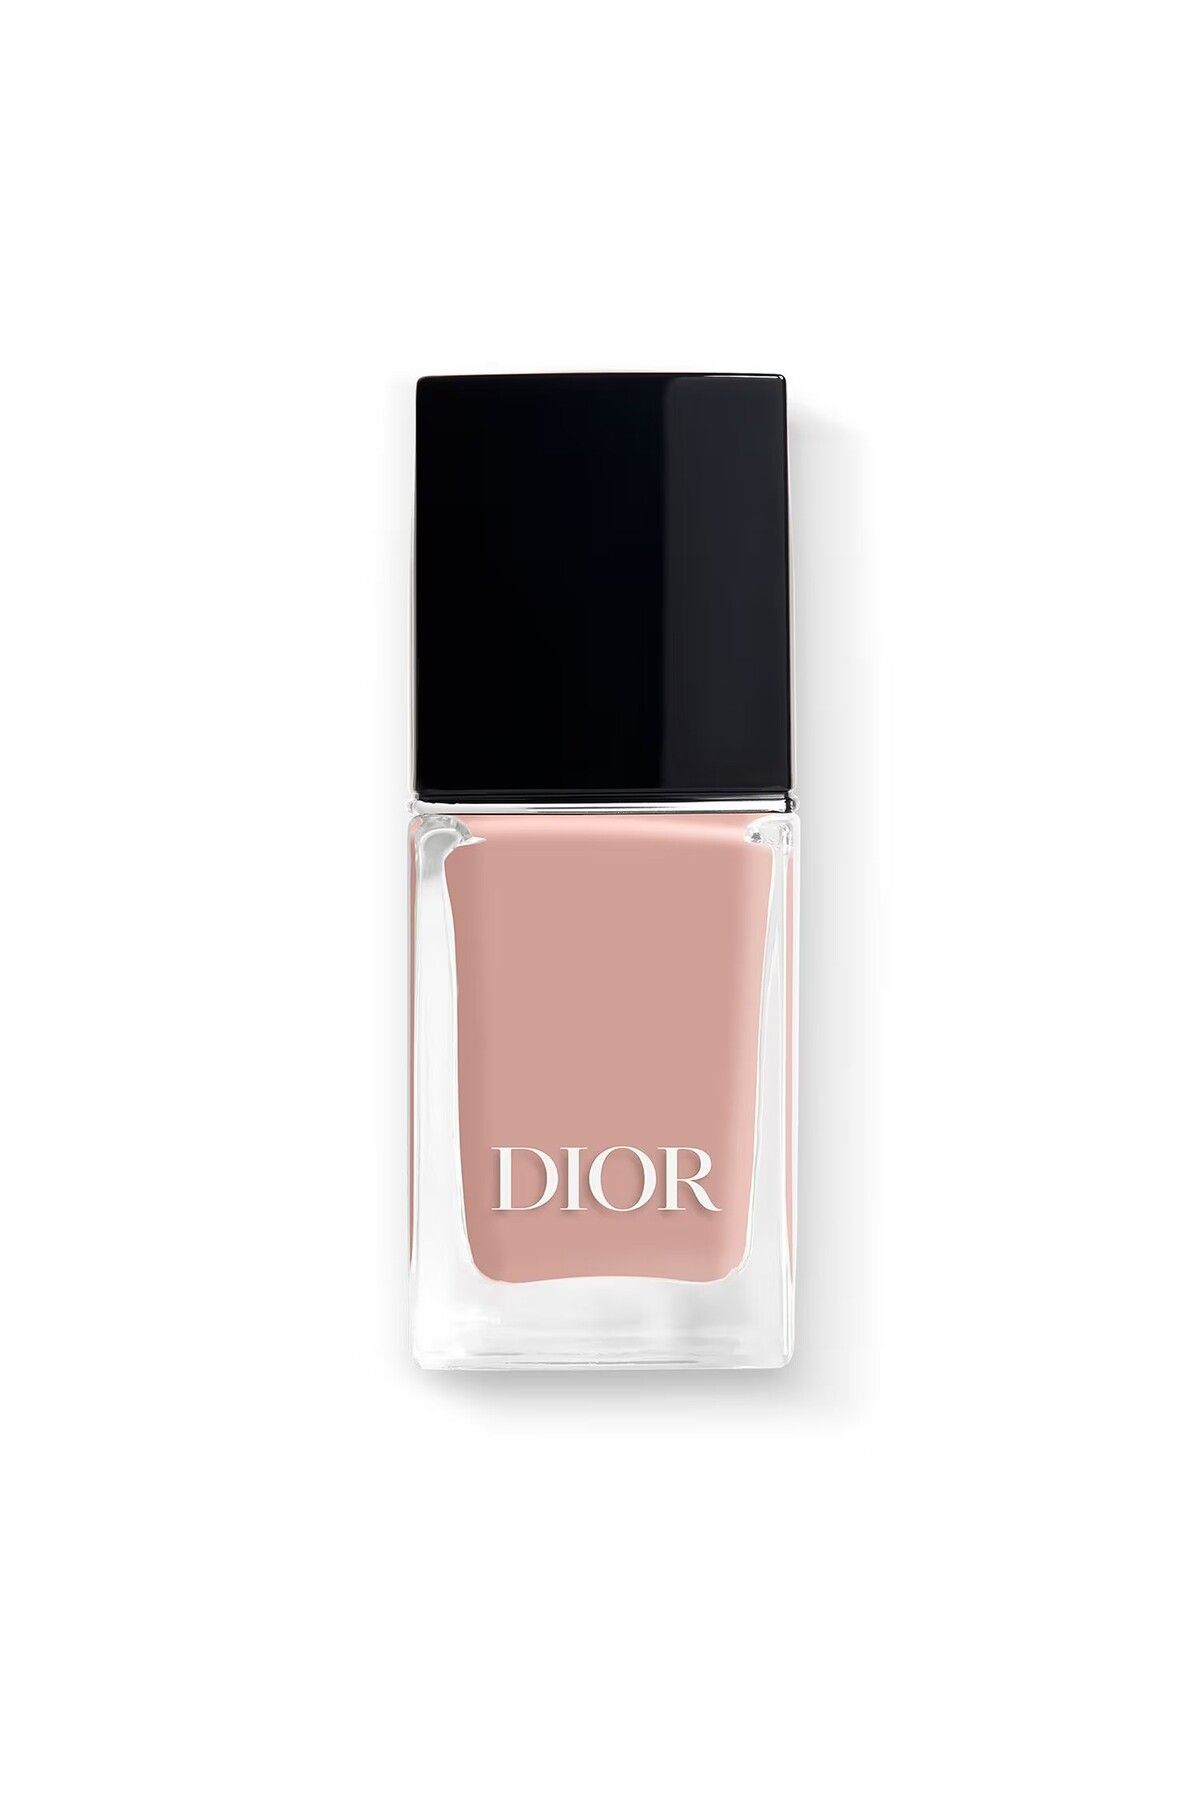 Dior Vernis - Parlak Kaplamalı Ve Jel Efektli Oje 10 ml